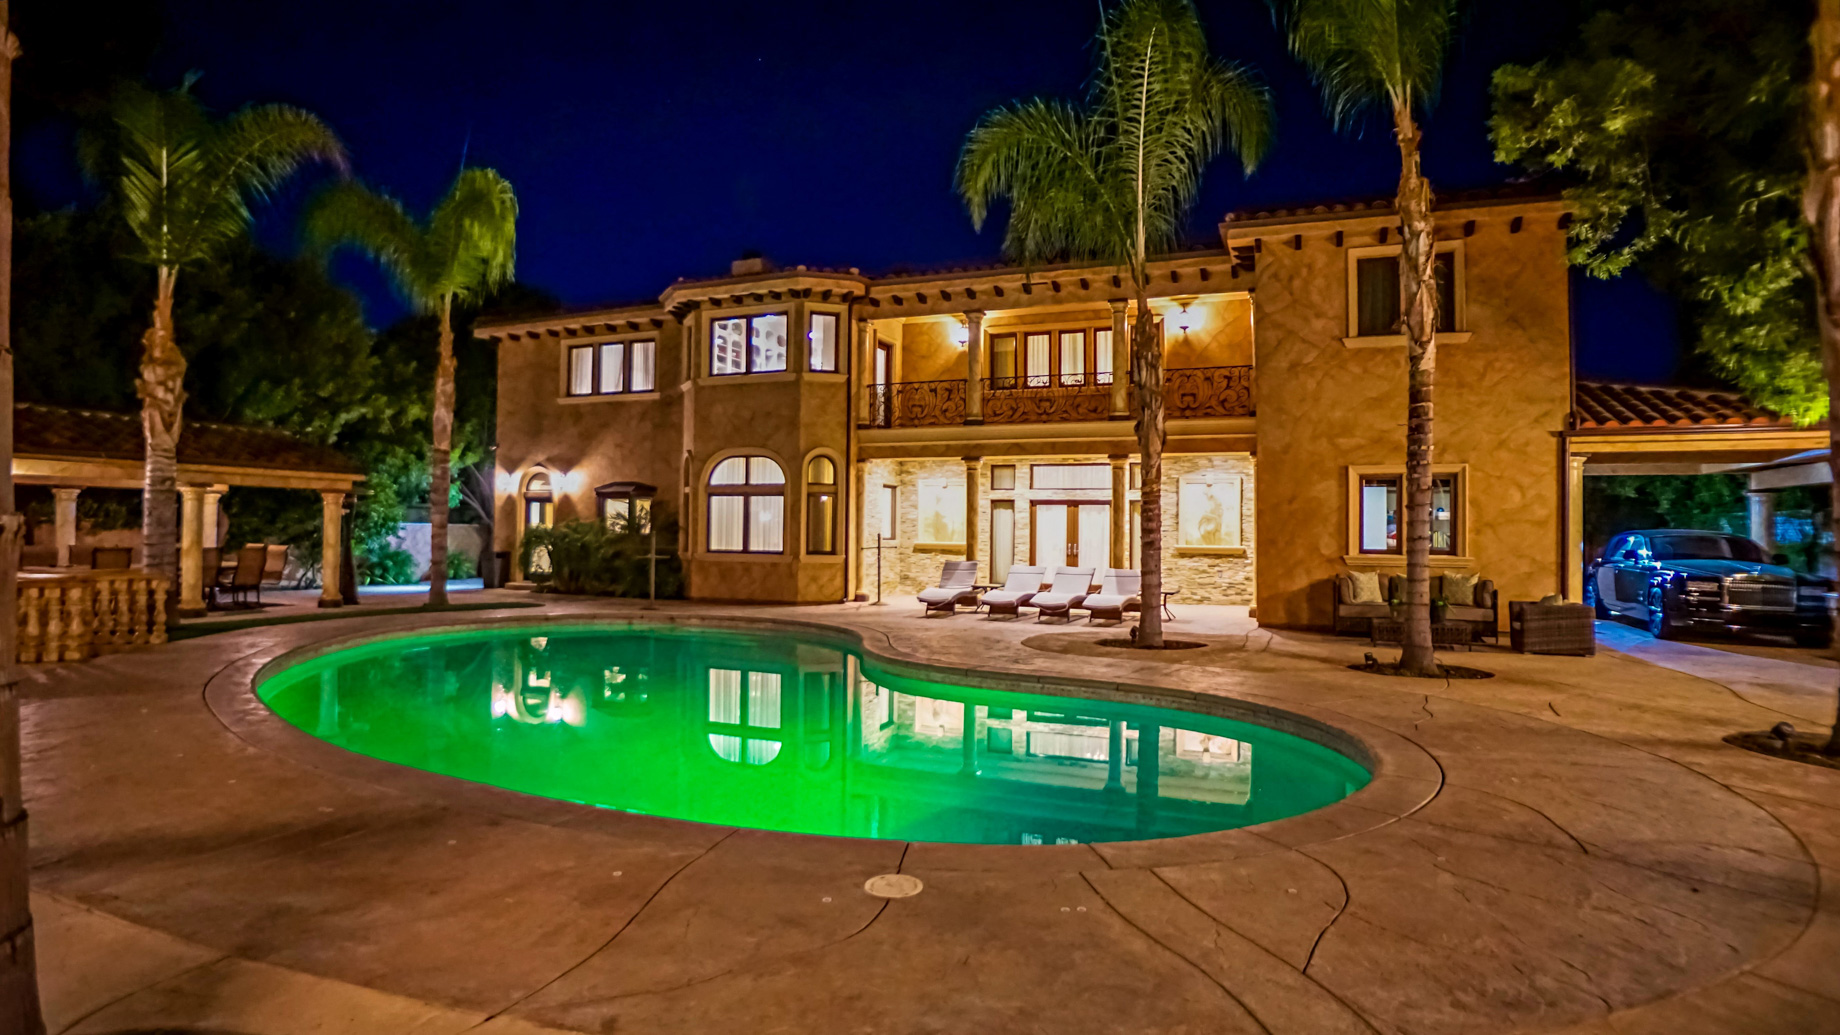 Chandler Estates Home – 13854 Albers St, Los Angeles, CA, USA